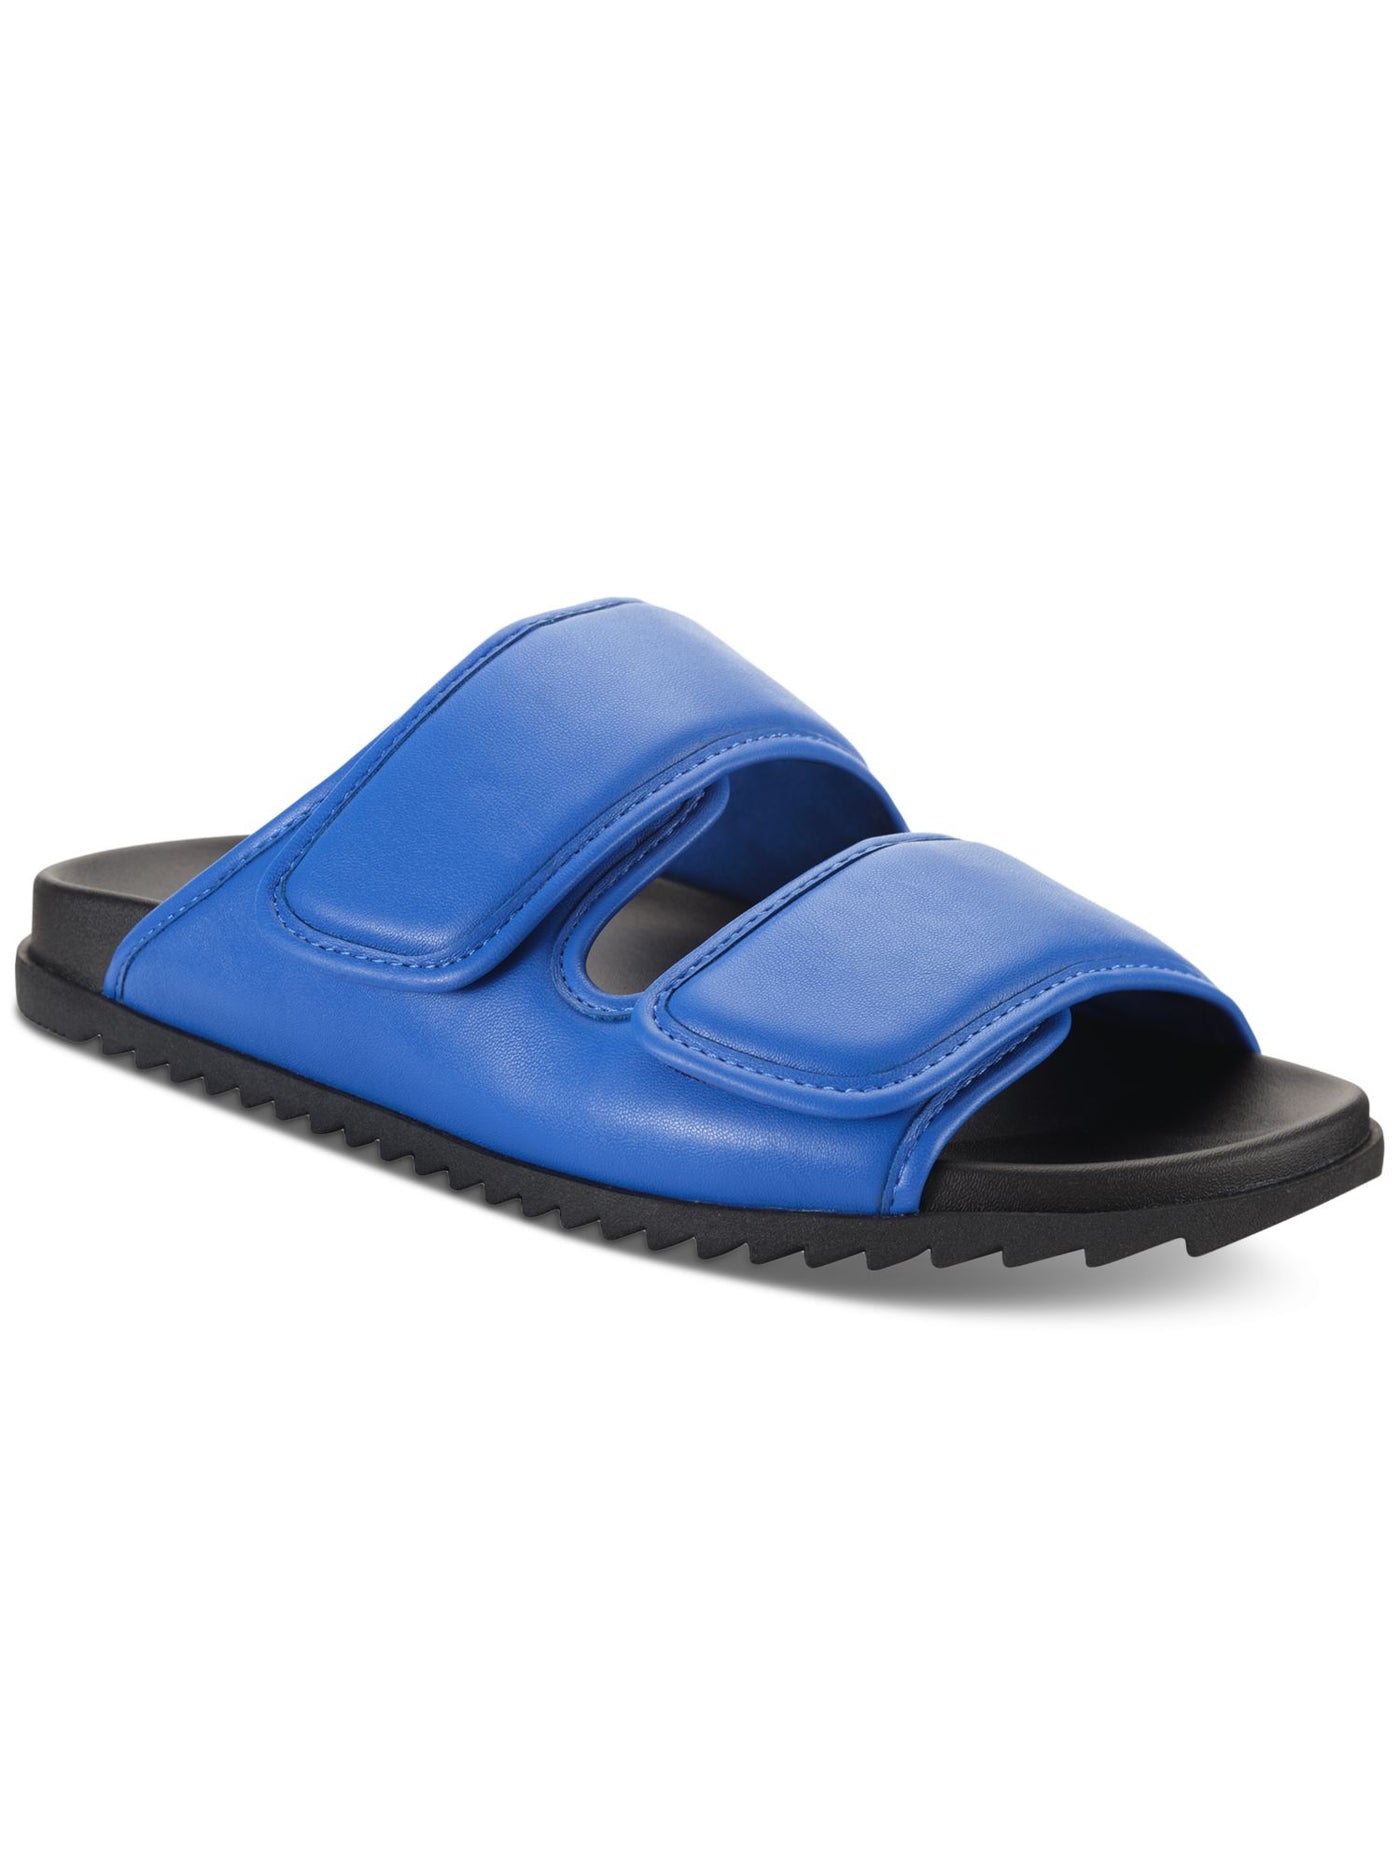 INC Mens Blue Treaded Open Toe Platform Slide Sandals Shoes 7.5 M